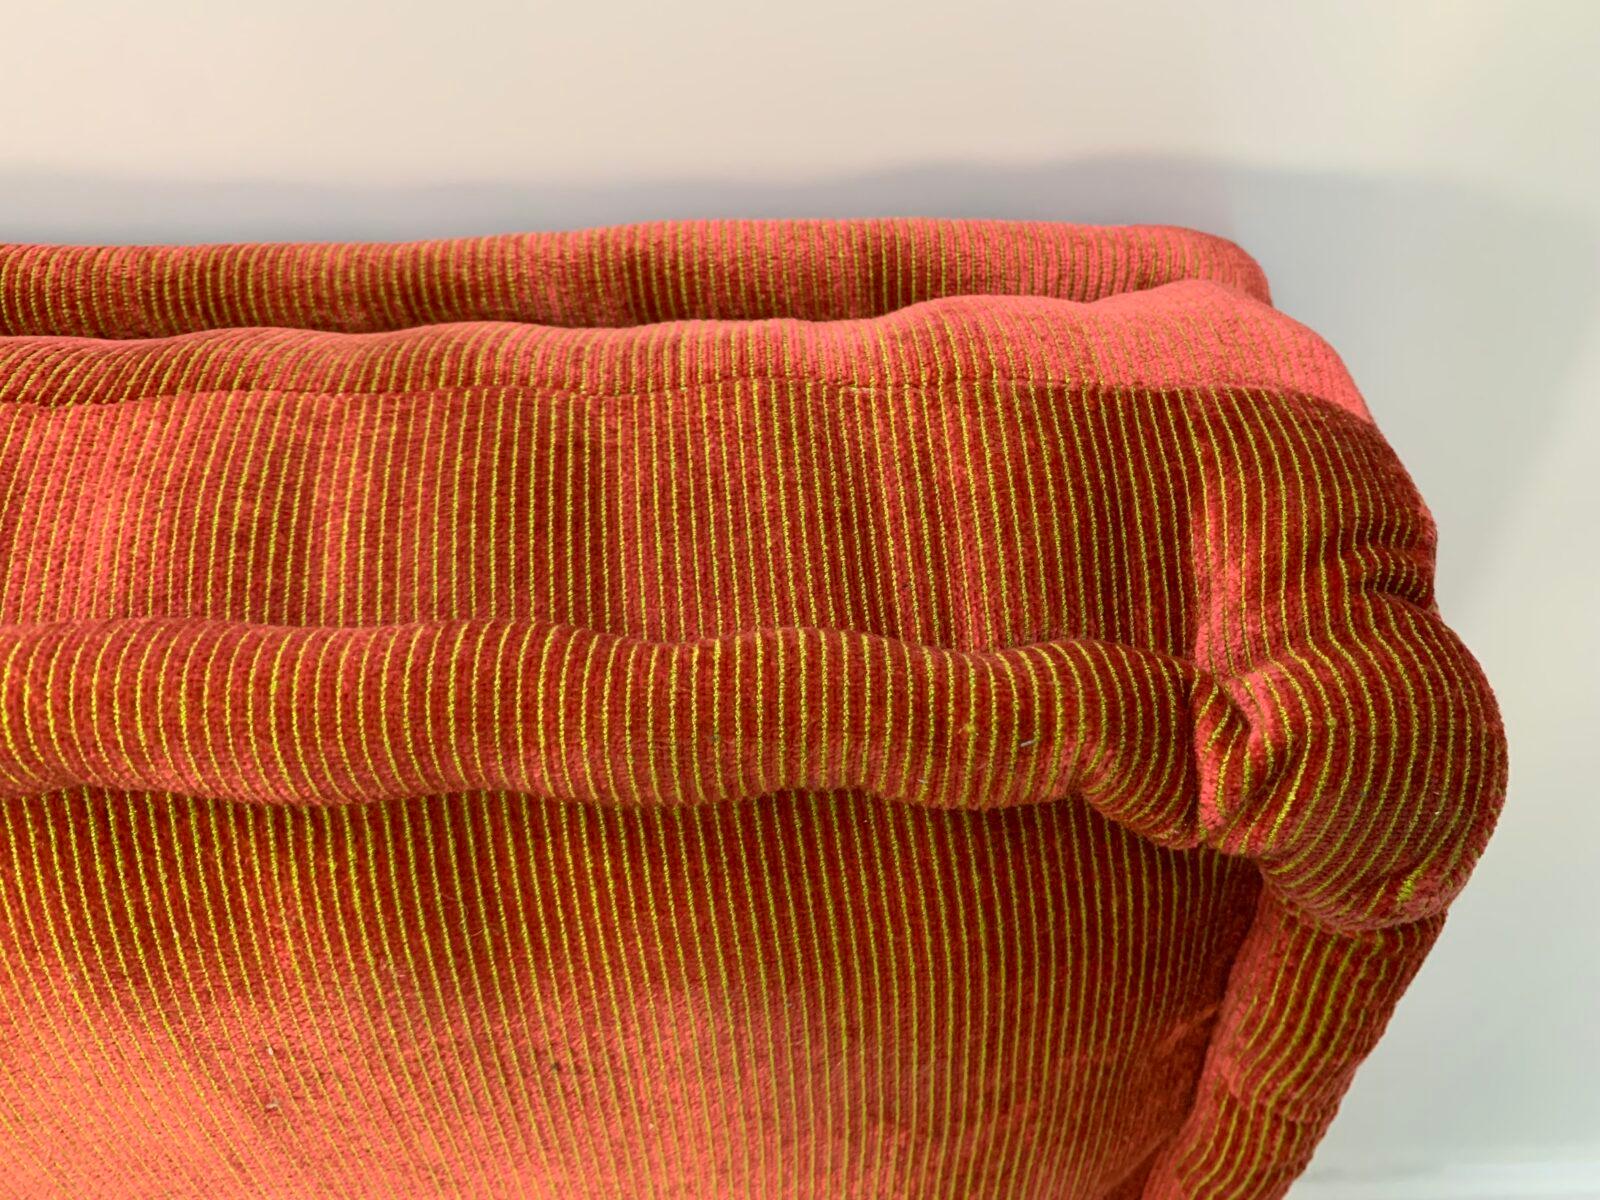 Roche Bobois “Mah Jong” Sofa & Table – In Missoni Fabric For Sale 12